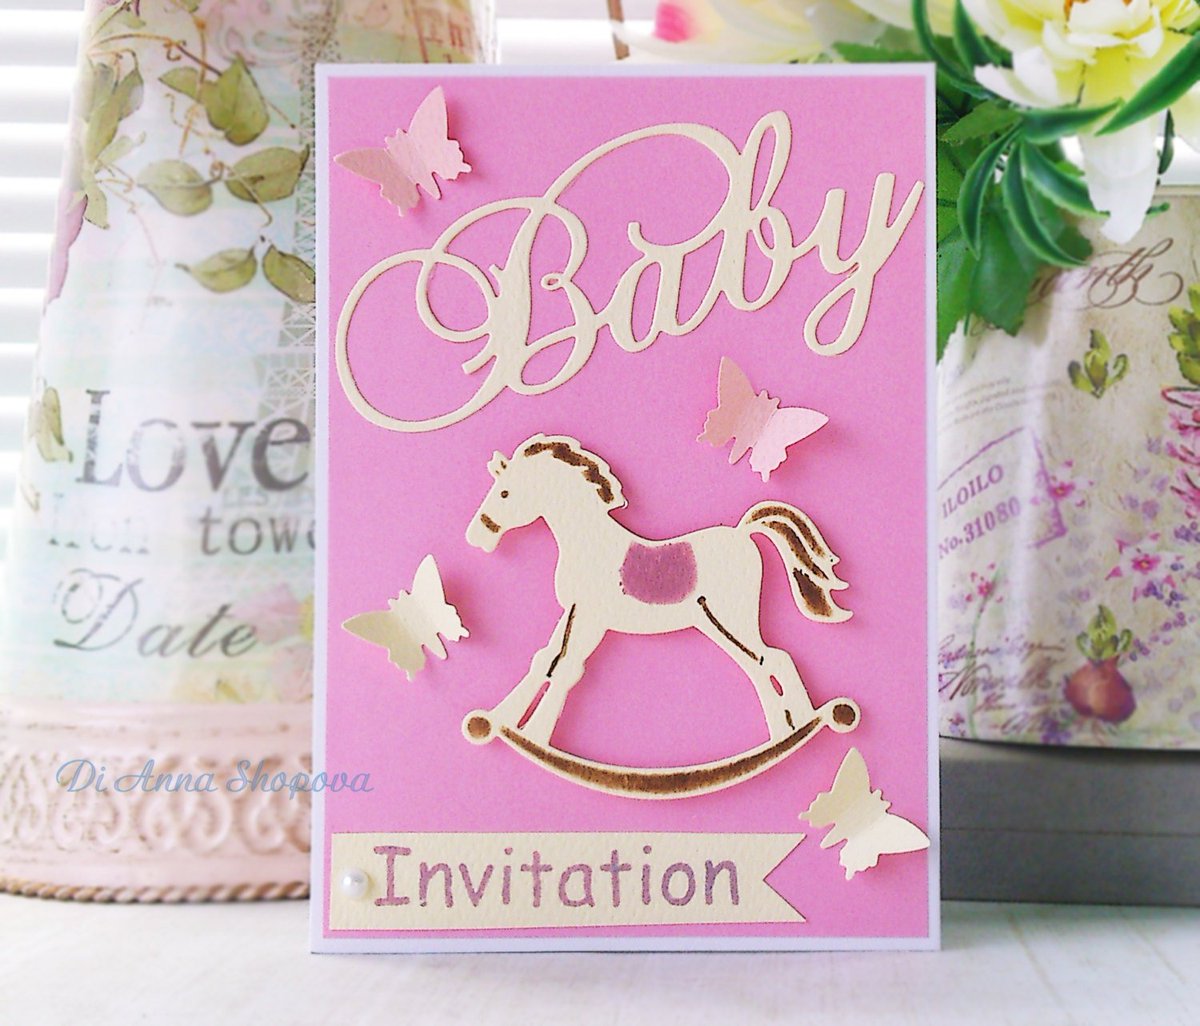 Luxury Baby Shower Invitations for a Girl - Handmade New Ba… tuppu.net/488ebb52 #PrincessParty #BabyInvitations